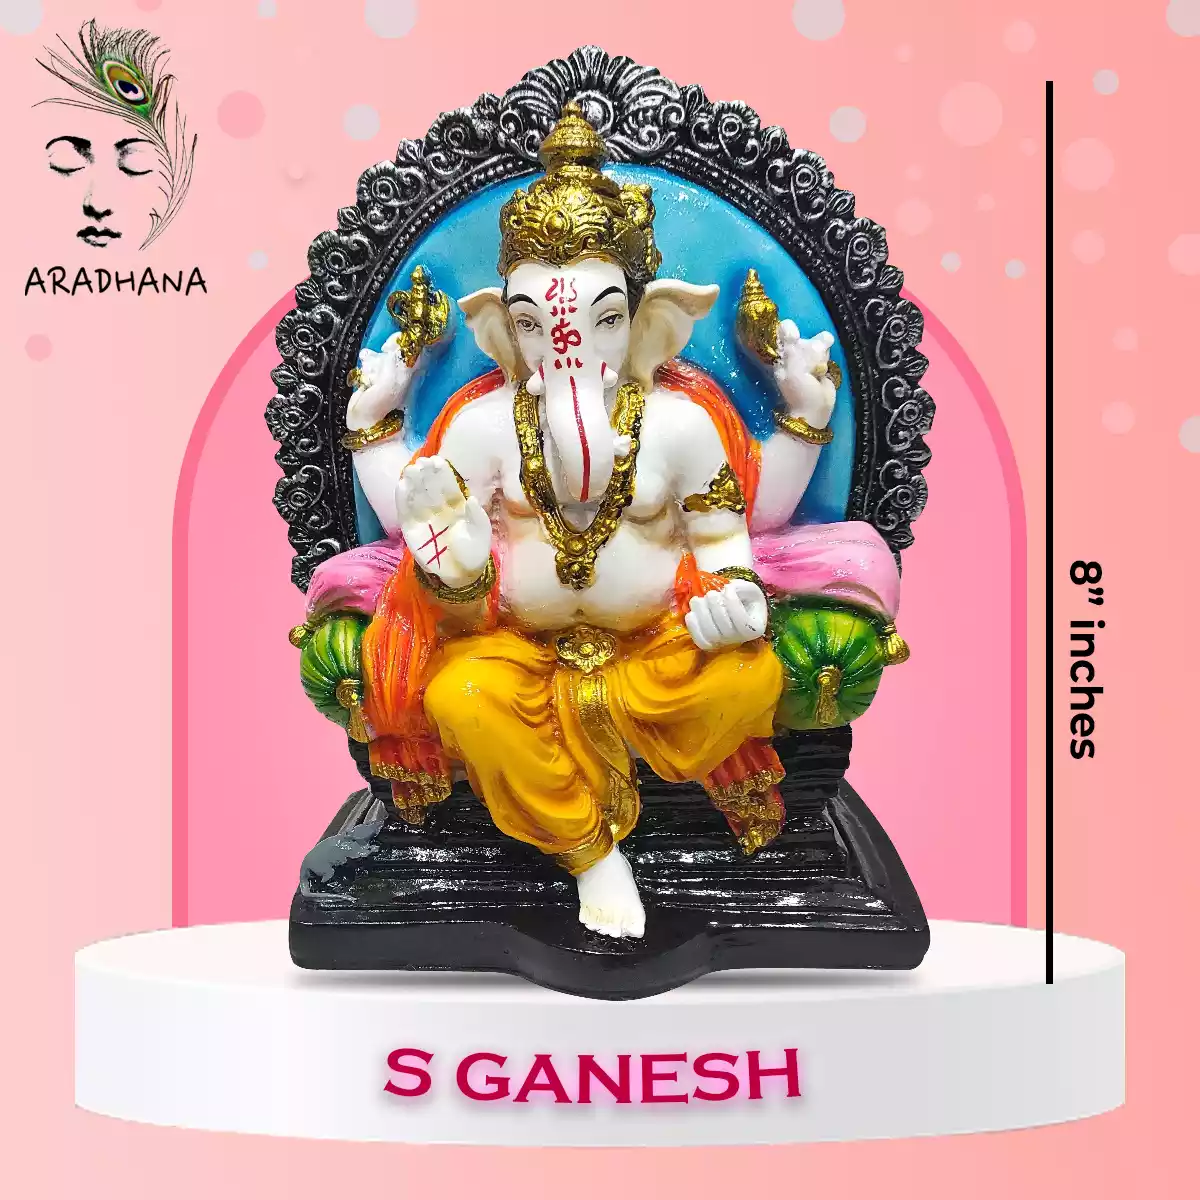 S Ganesh